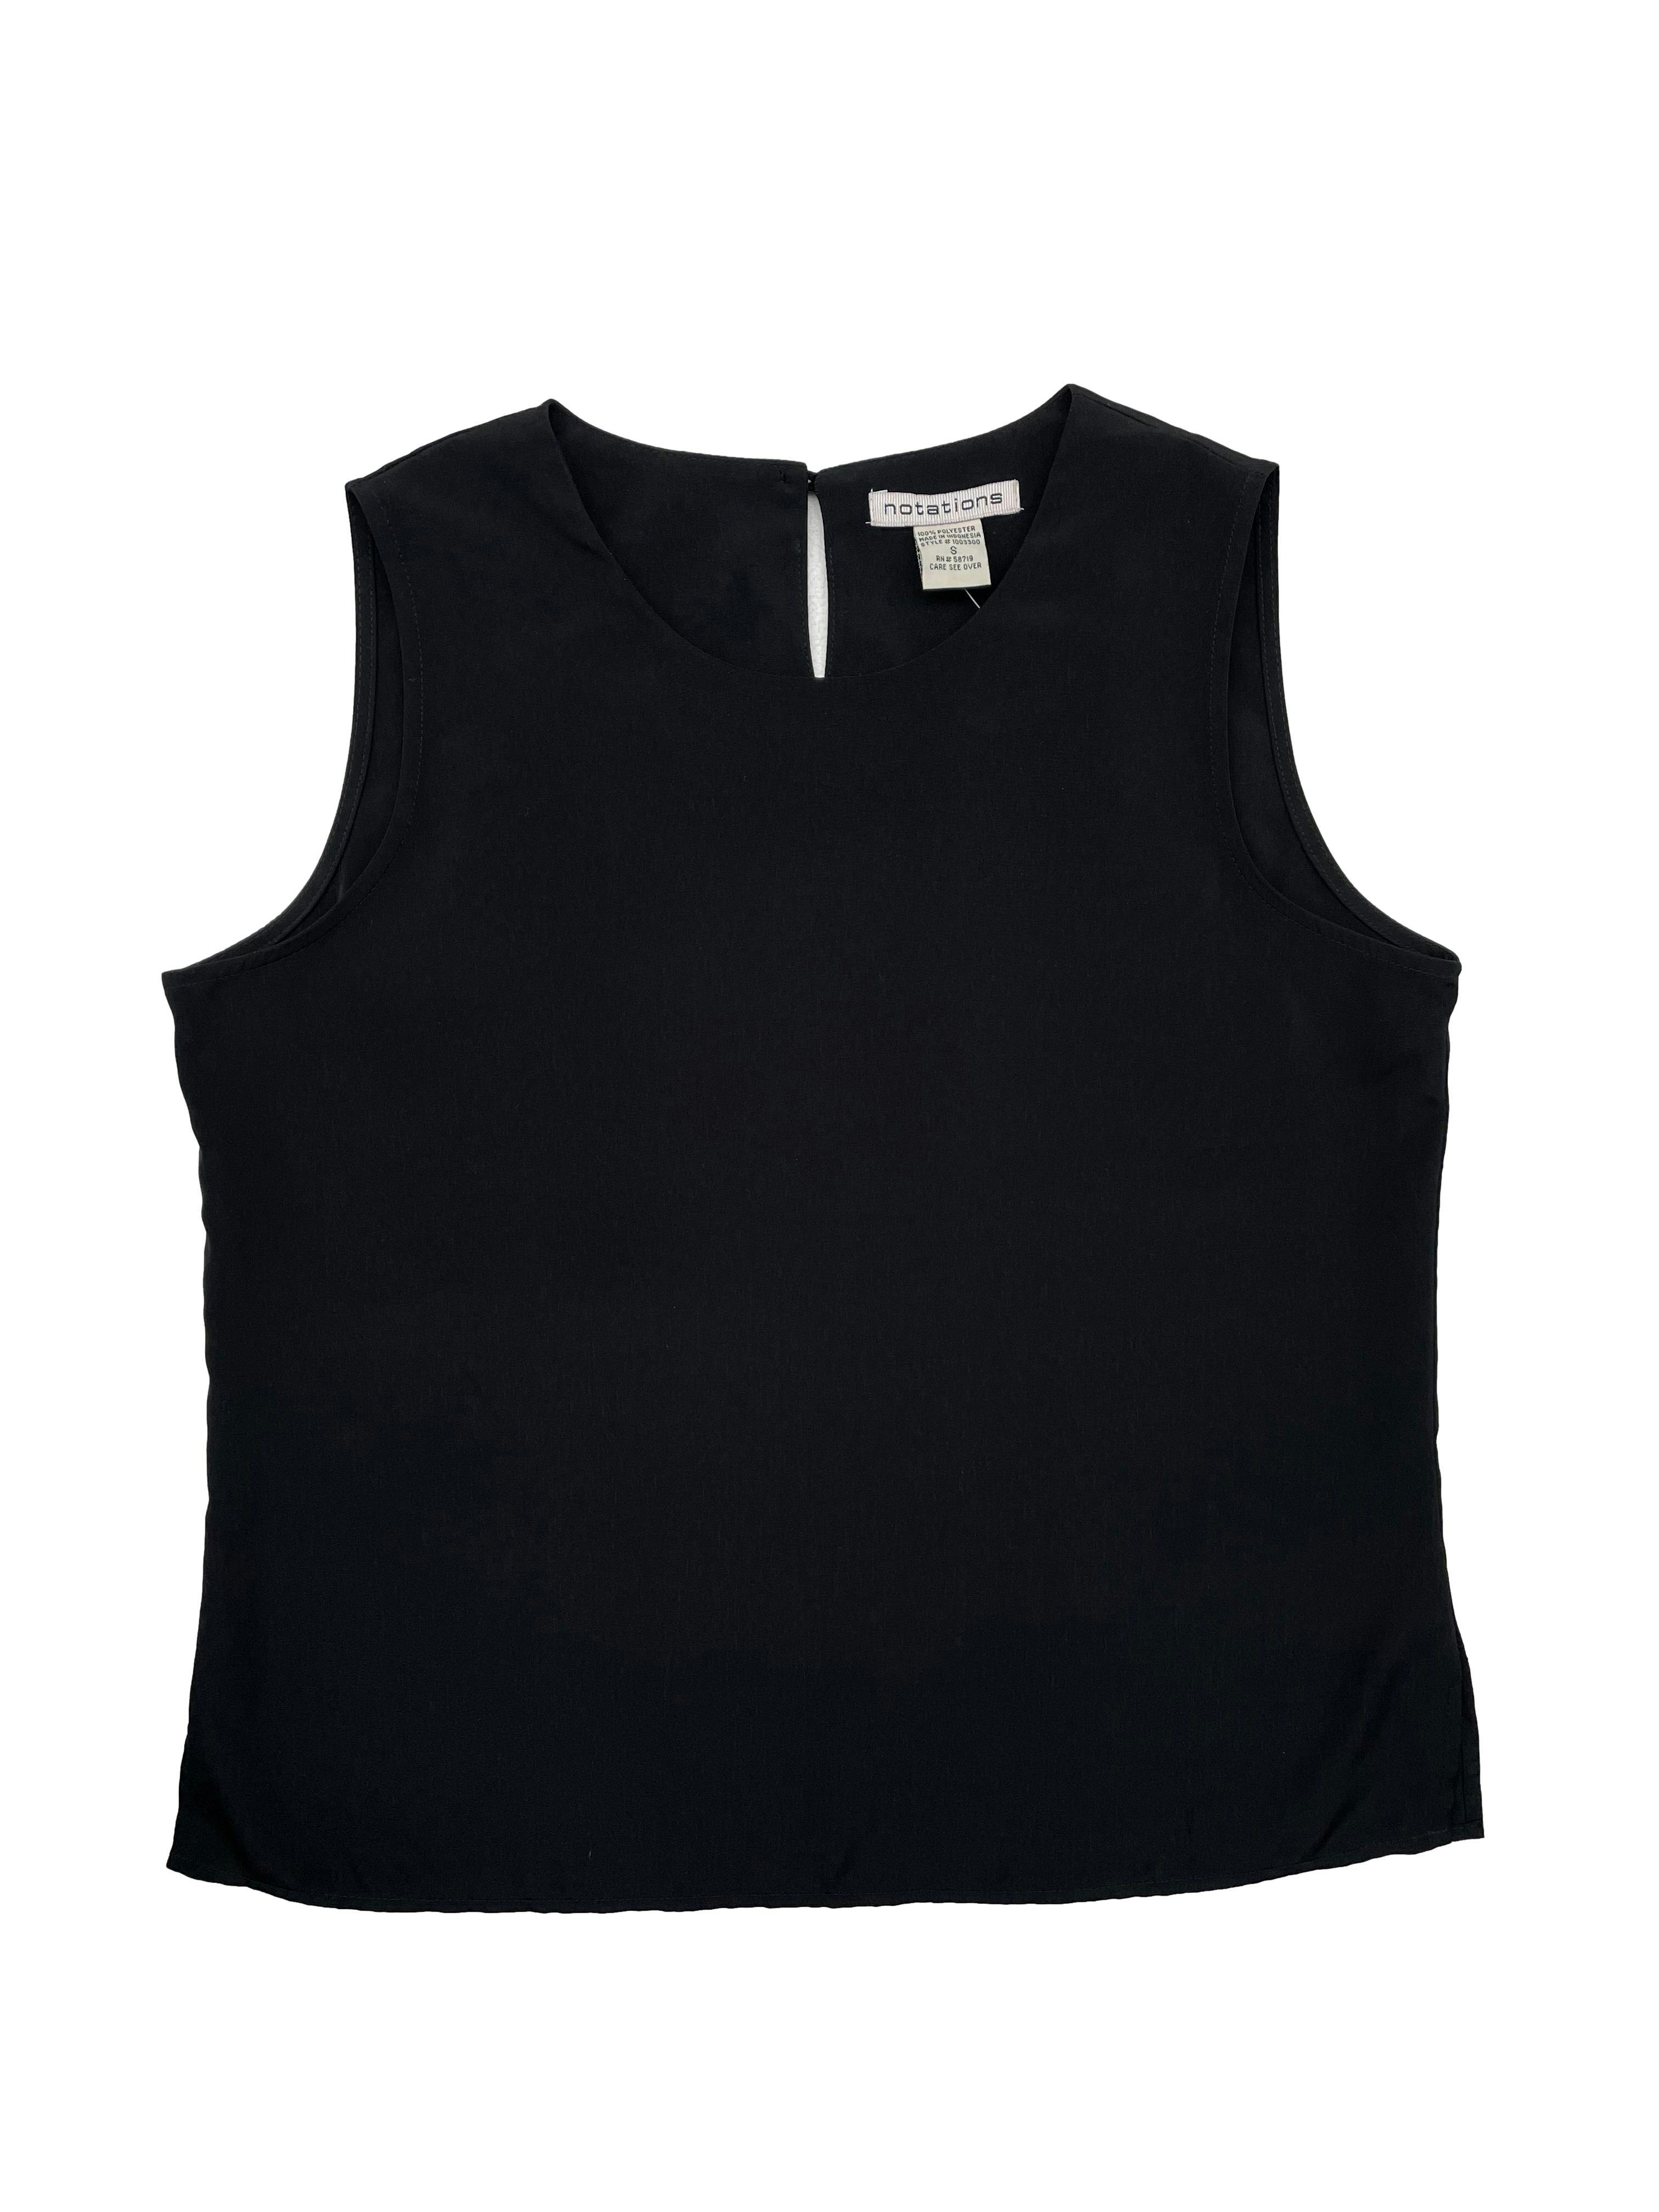 Blusa Notations negra, tela plana, manga cero, cuello redondo con botón posterior, aberturas laterales en la basta. Busto: 96cm, Largo: 55cm